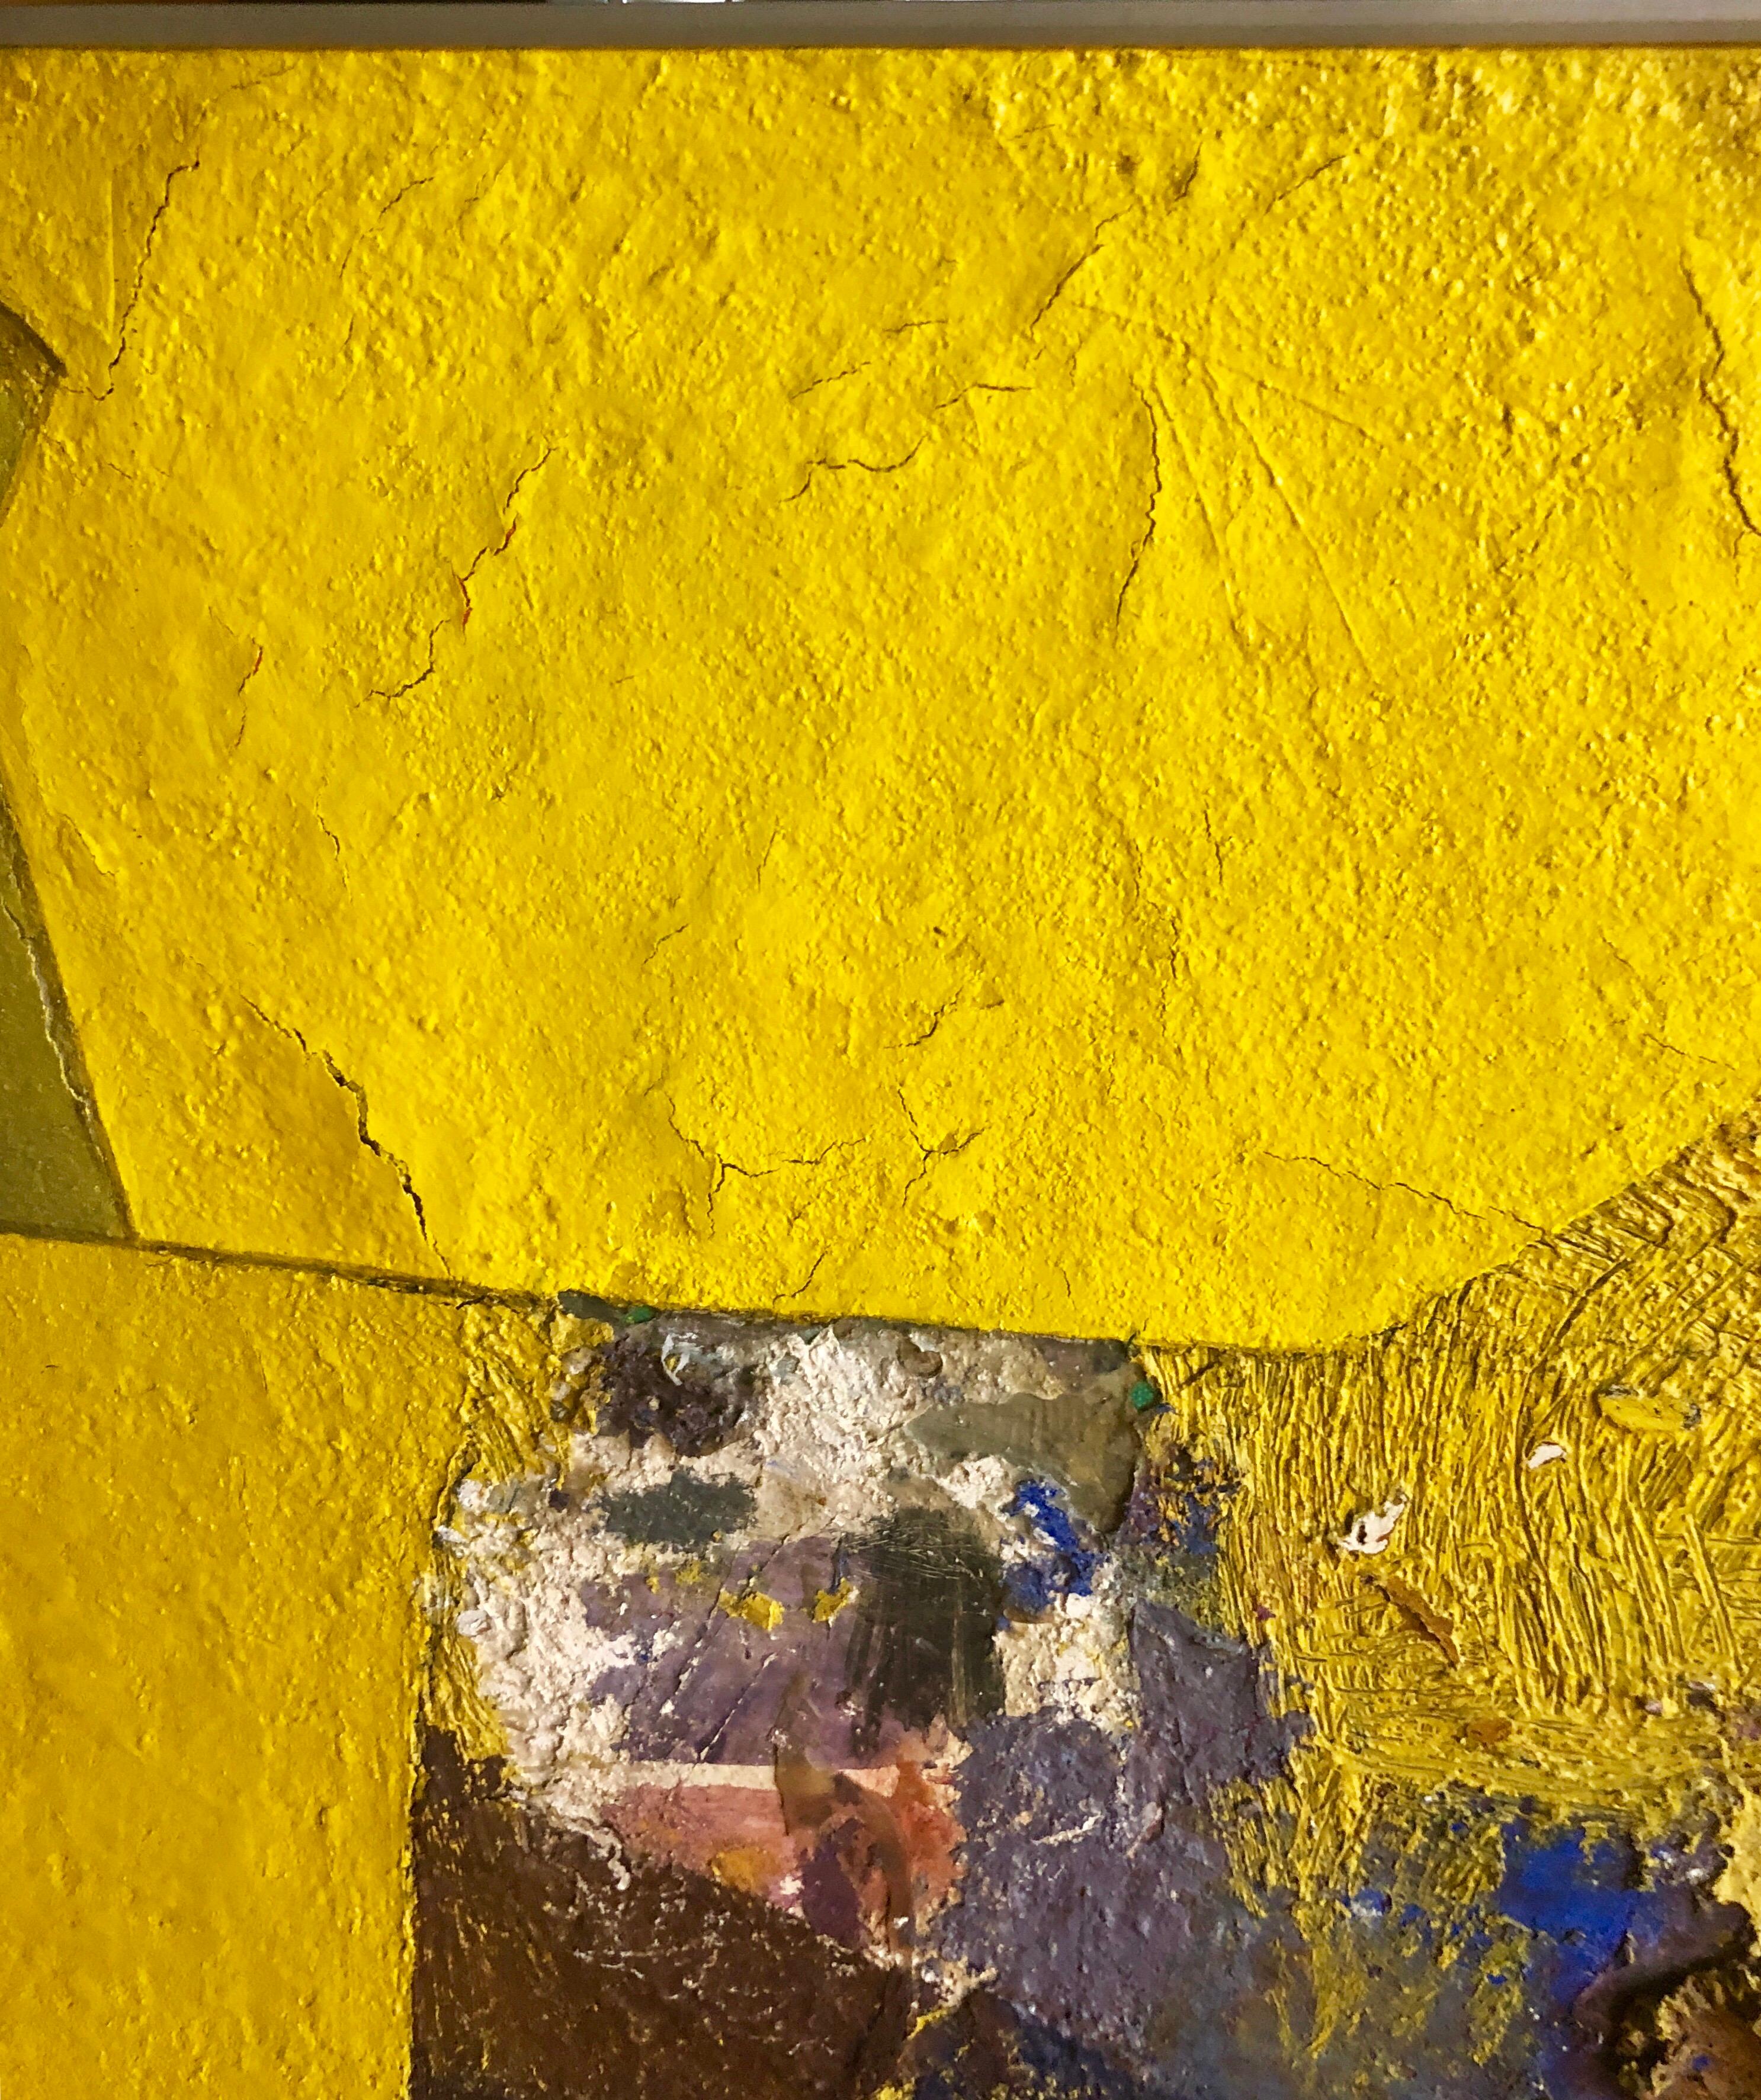 PAJARO AMARILLO, The Yellow Bird. Latin American Mixed Media Painting 3